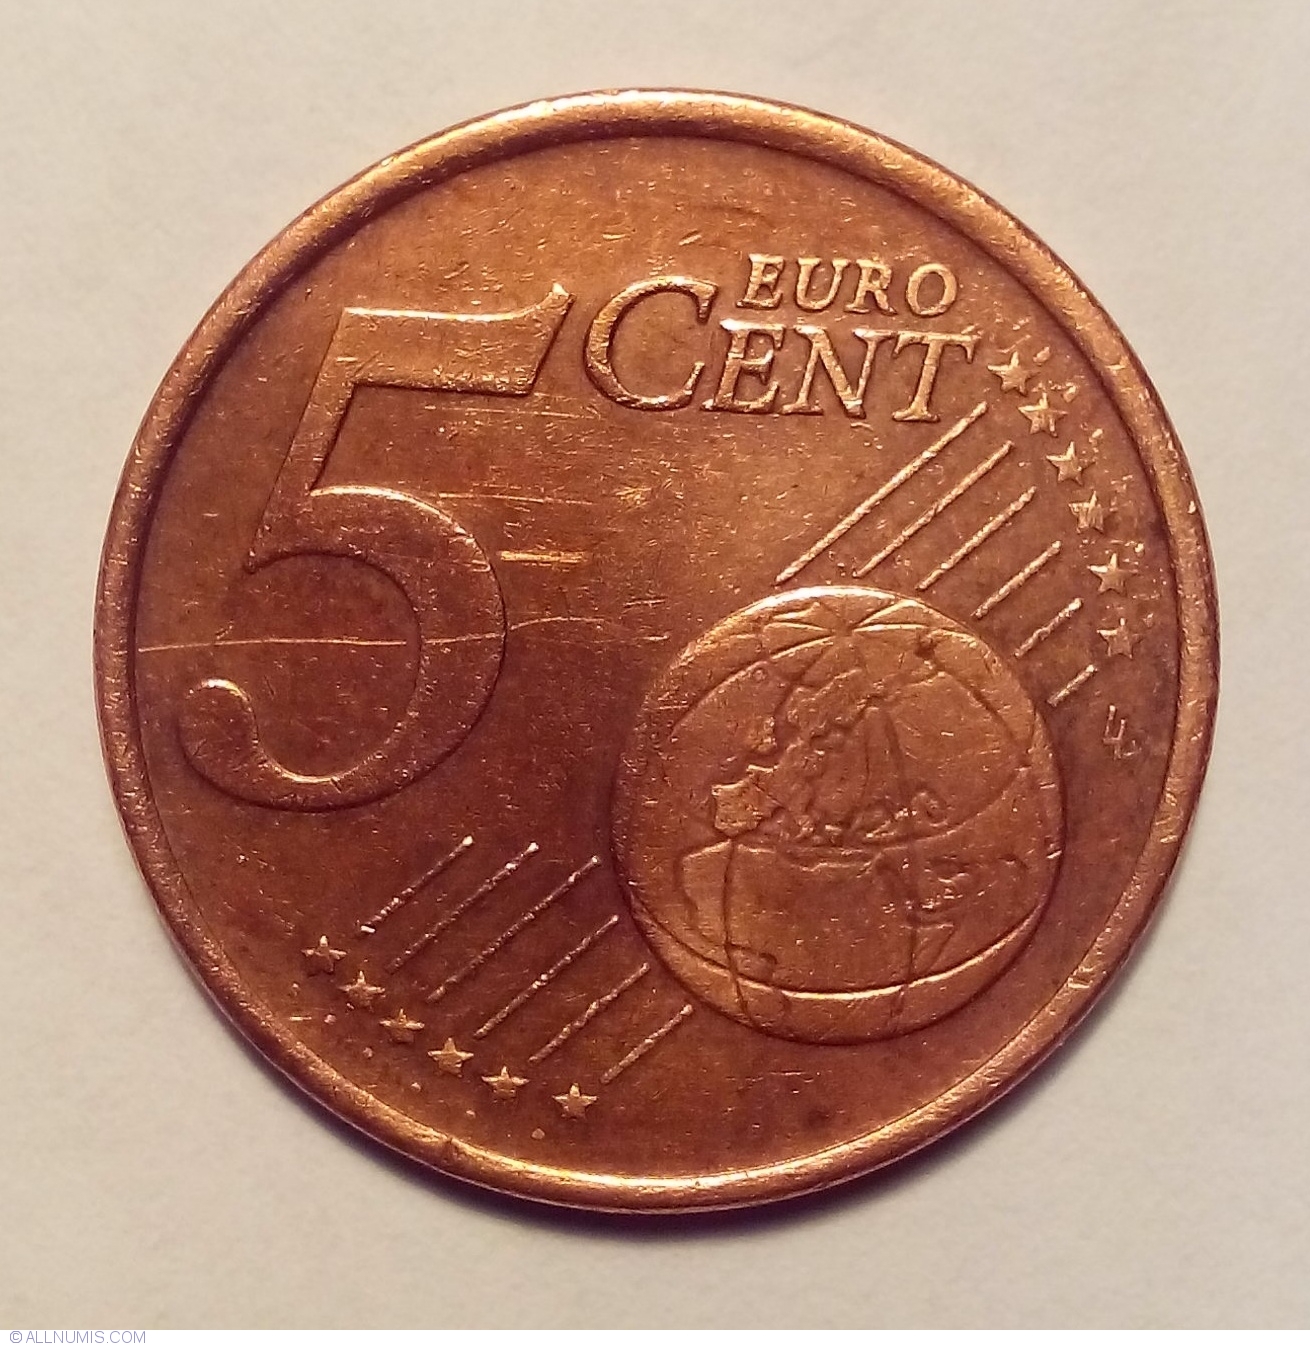 1 5 евро в рубли. 5 Euro Cent 2002. 5 Cent в рублях Euro 2002. 5 Евро цент в рублях. Пять центов в рублях.